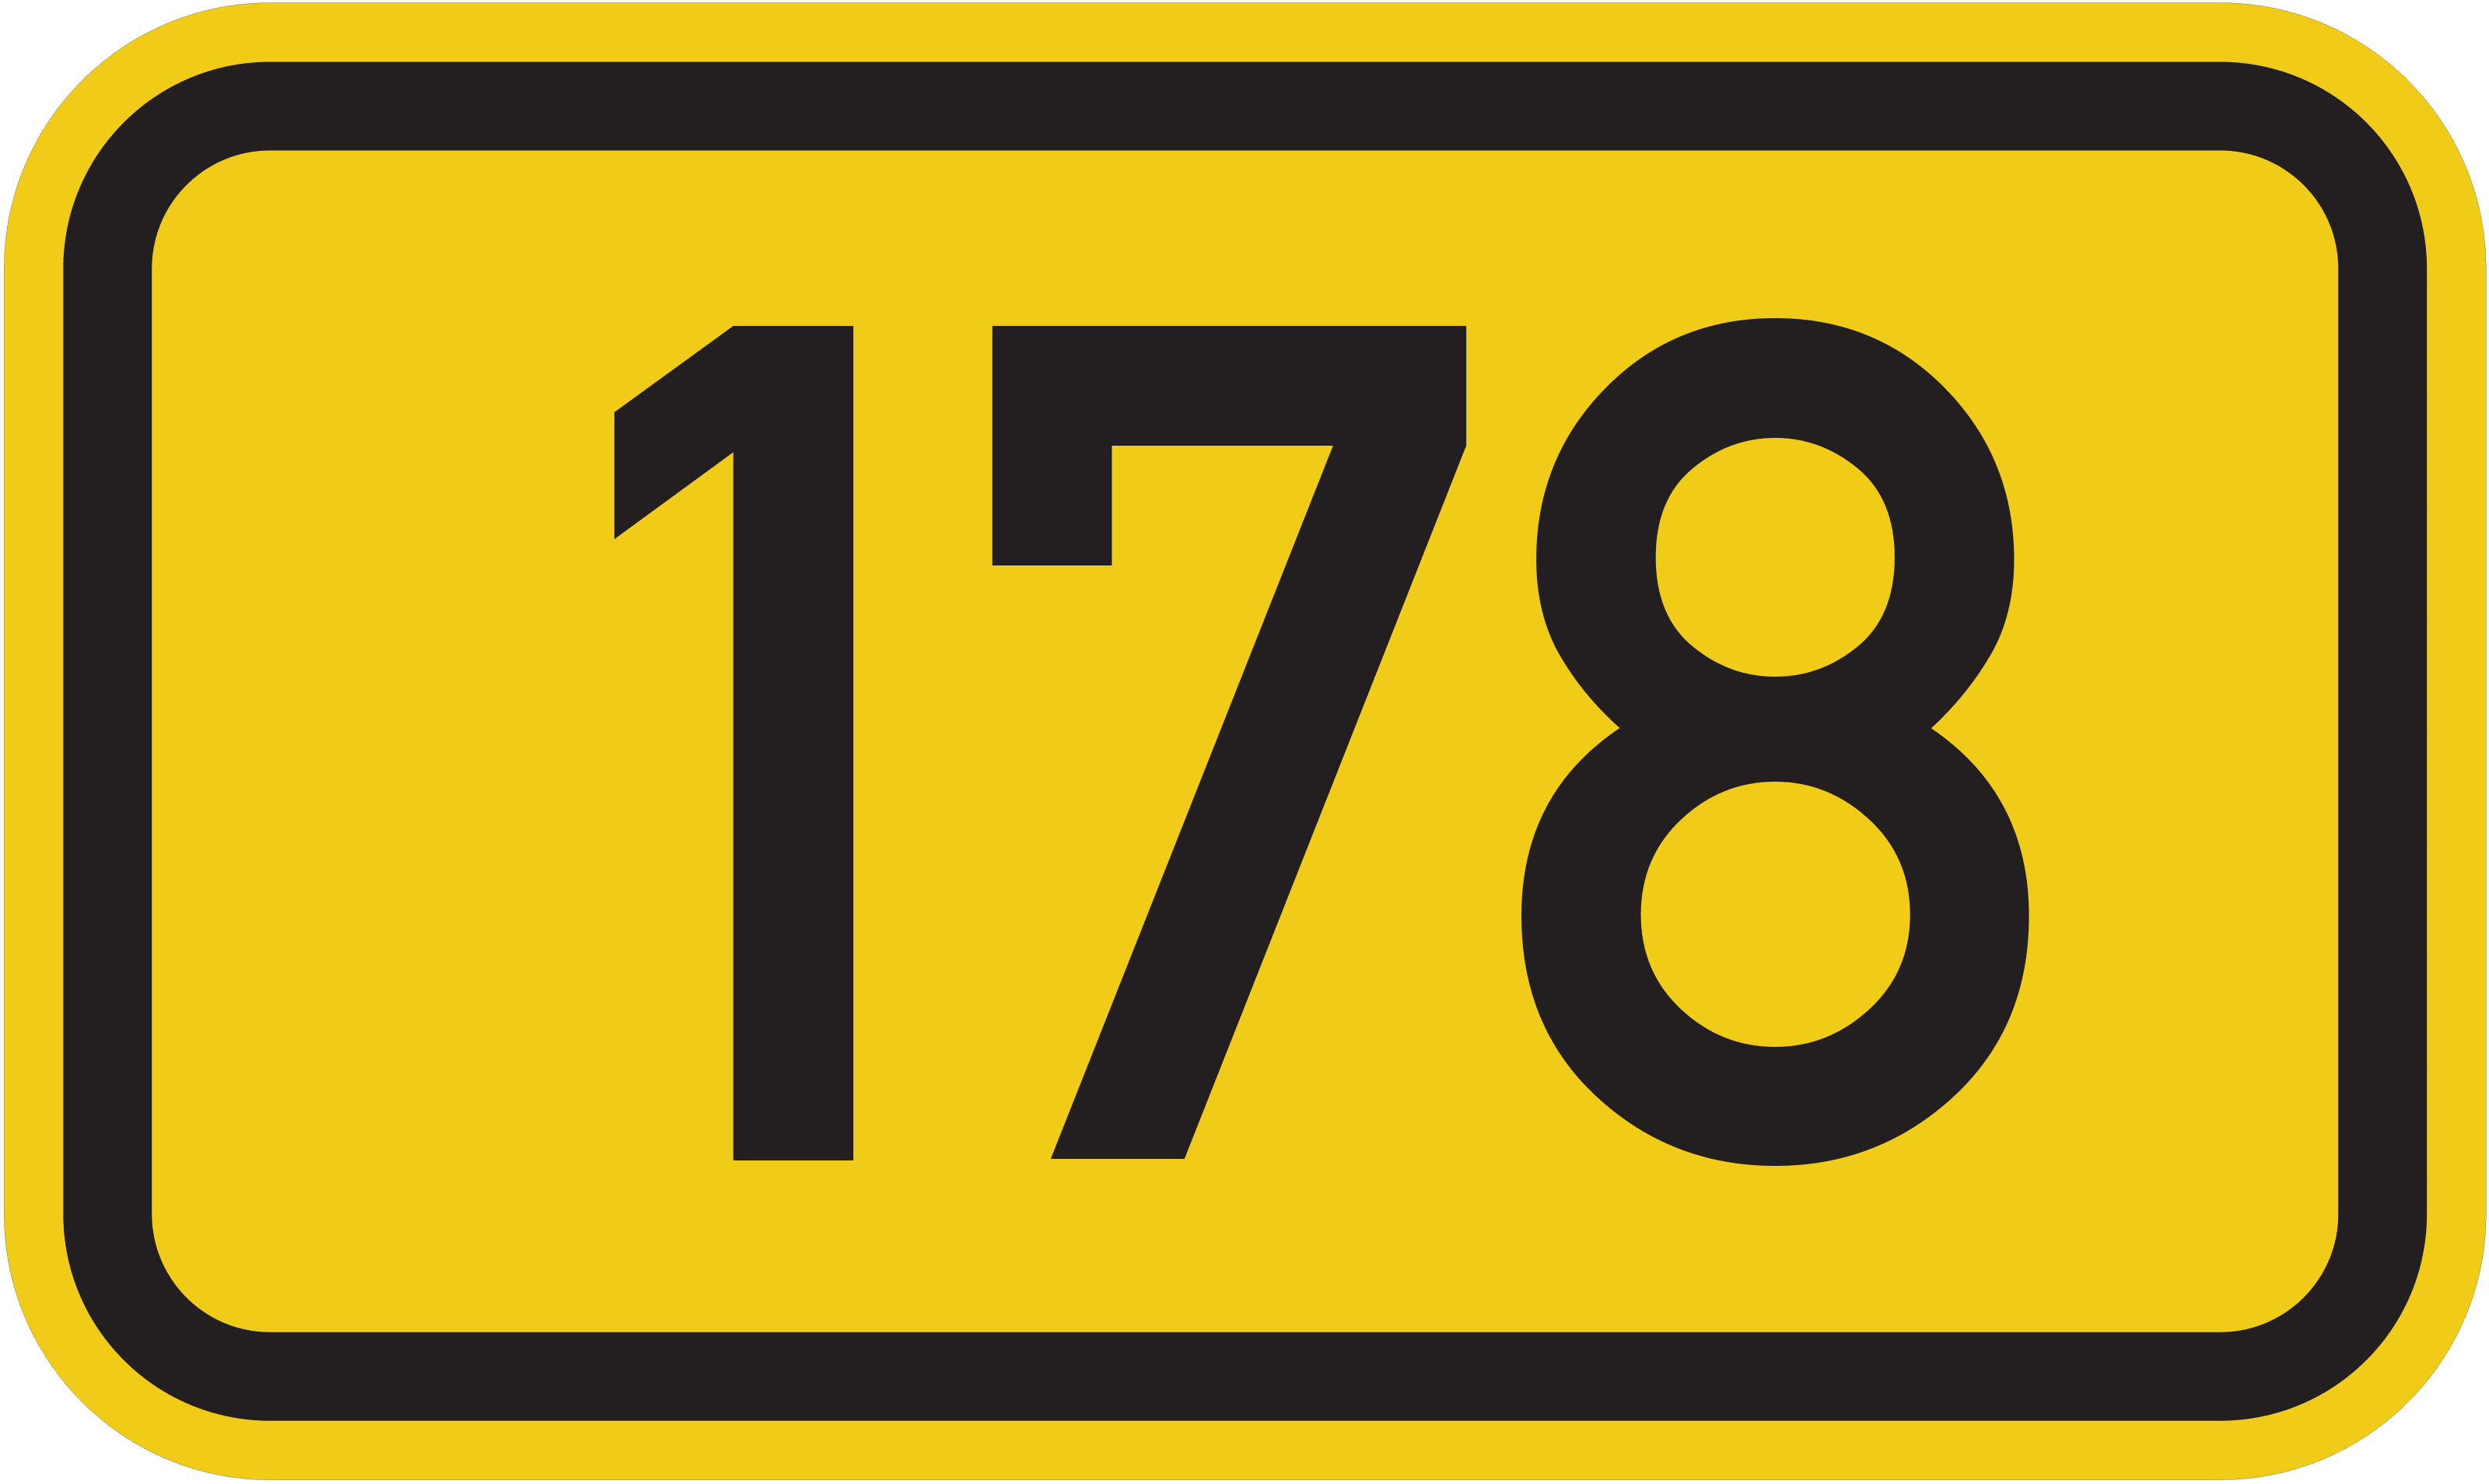 Straßenschild Bundesstraße 178